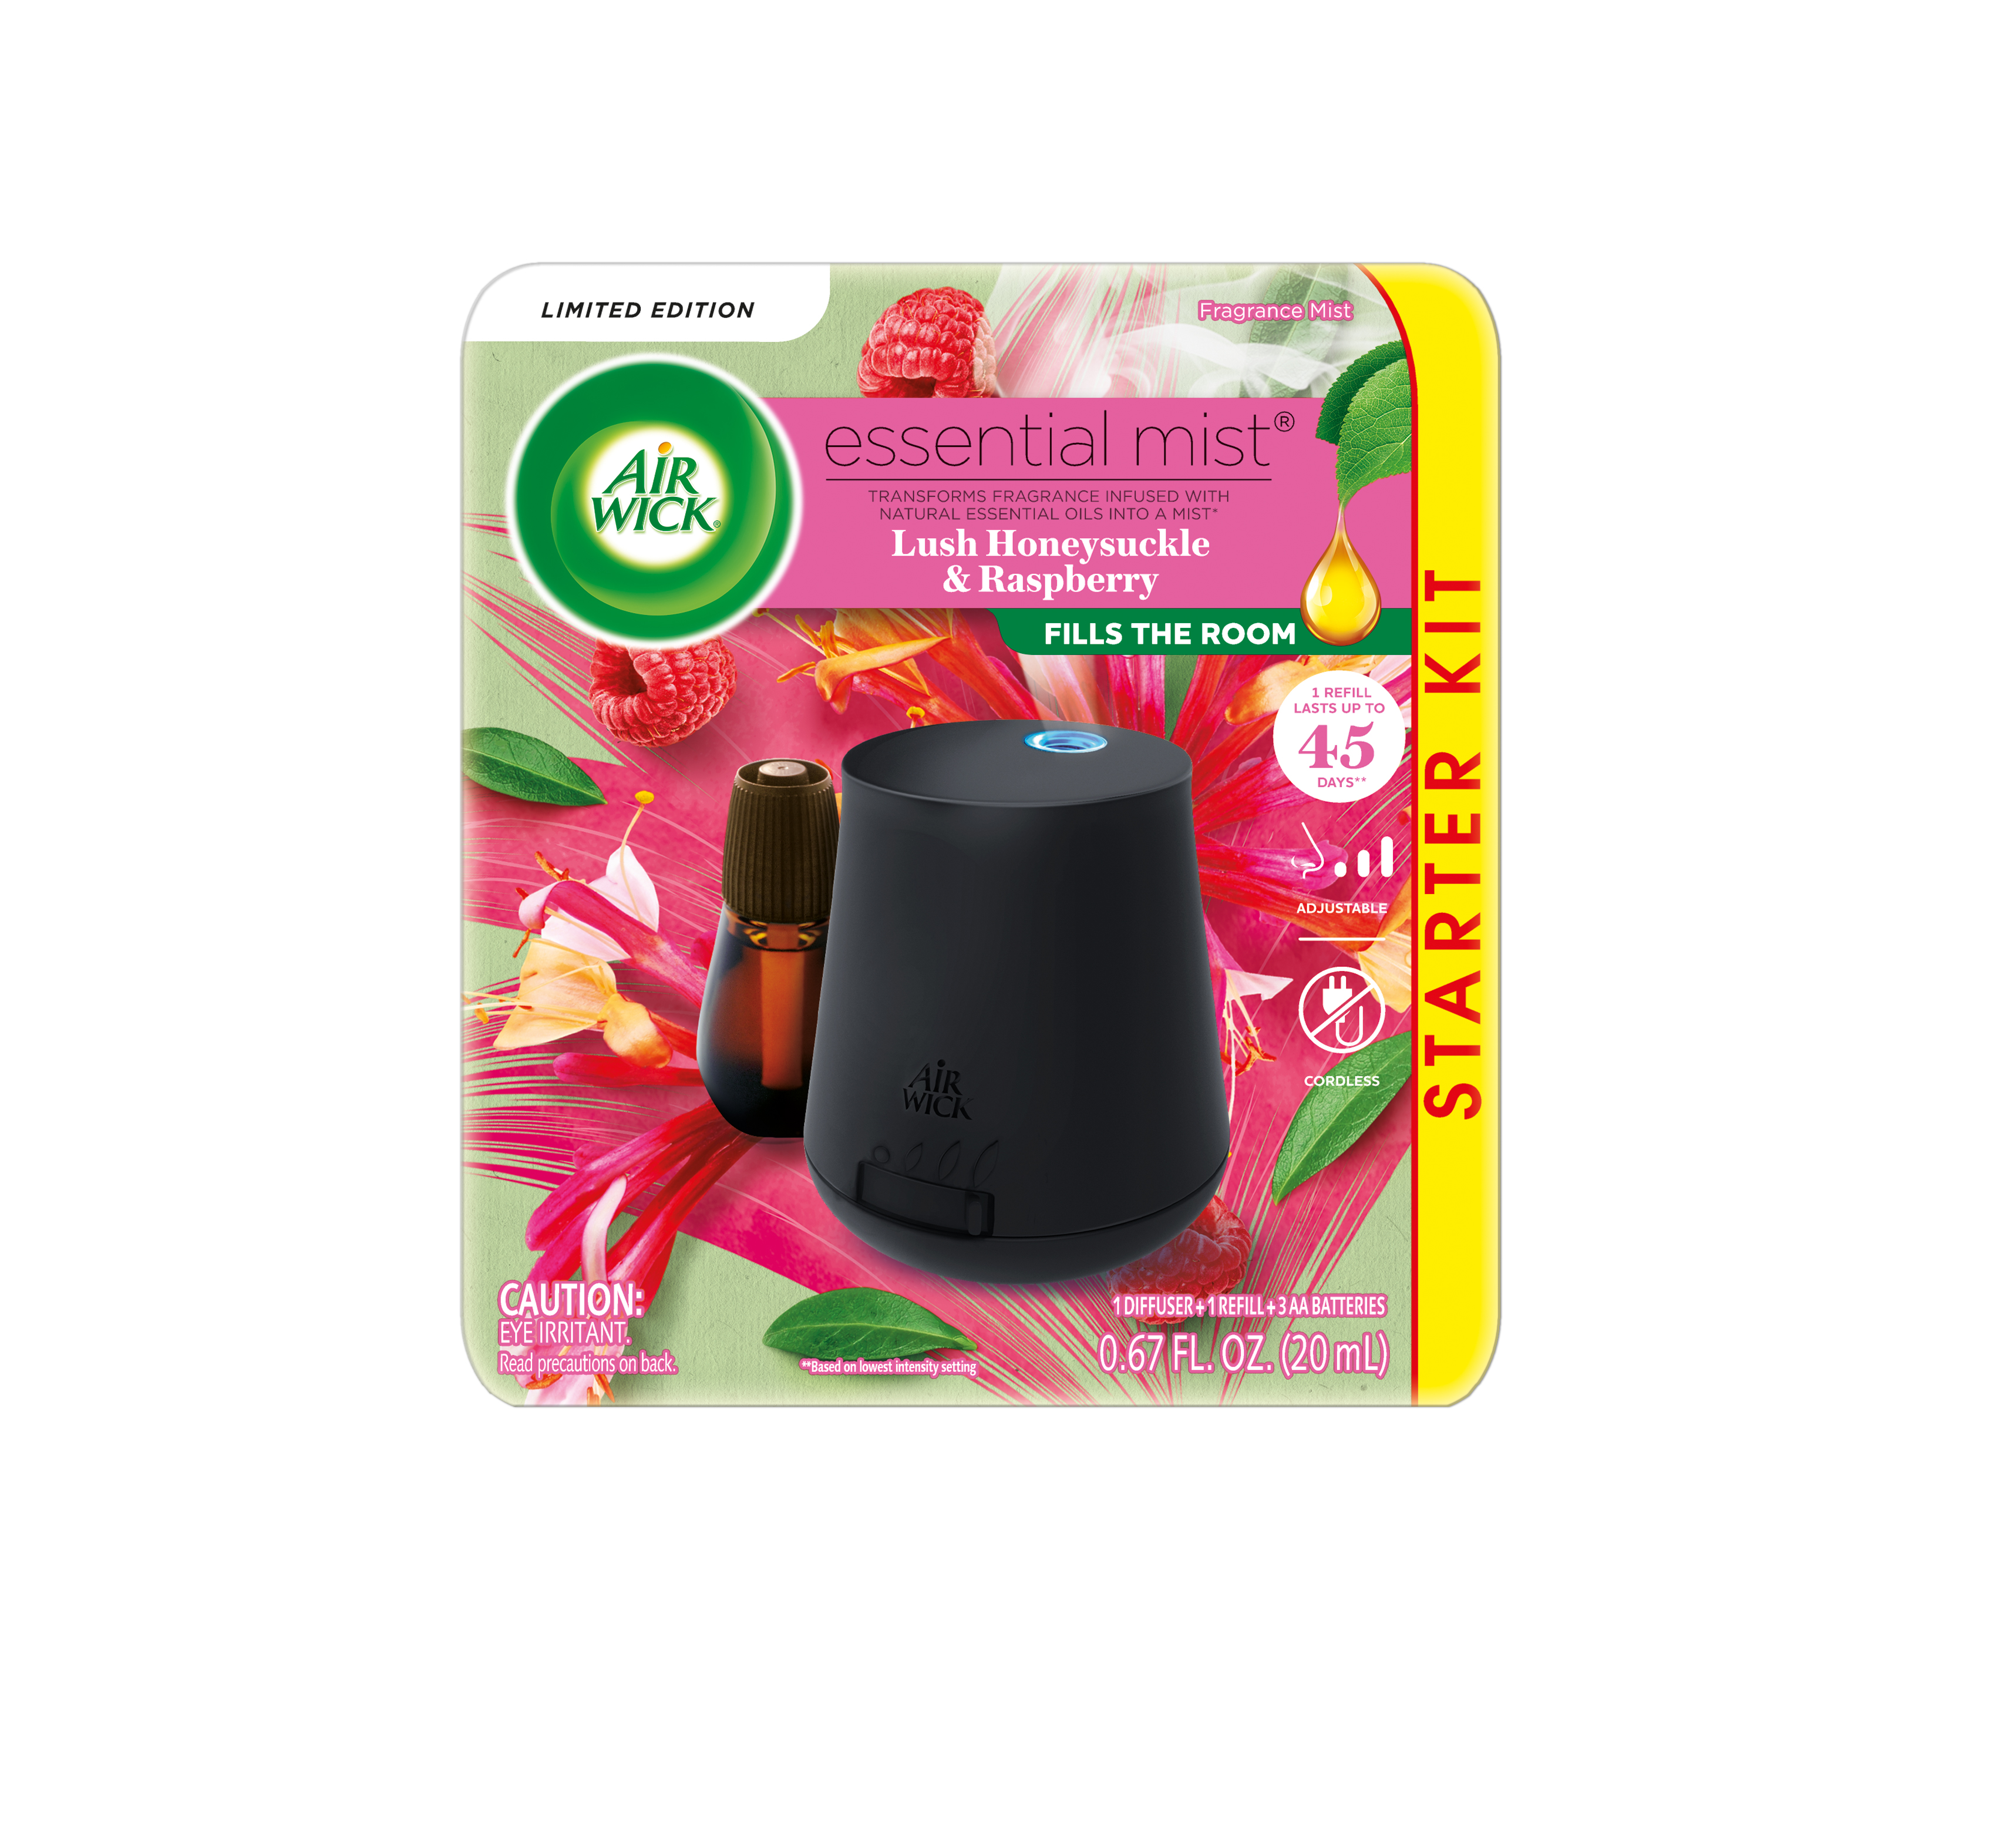 AIR WICK® Essential Mist - Lush Honeysuckle & Raspberry - Kit (Discontinued)